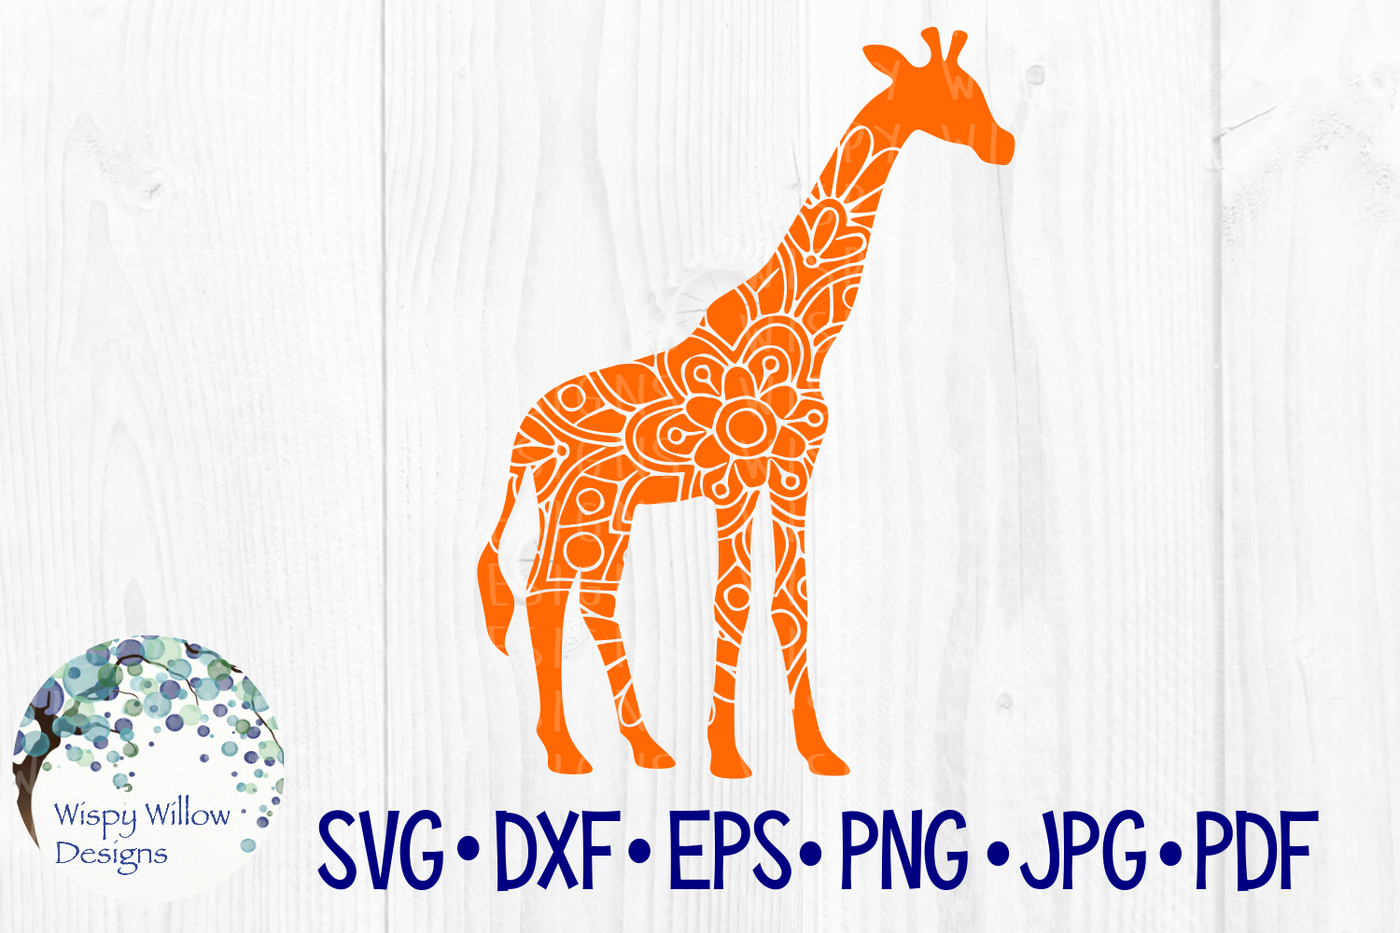 Giraffe Mandala Animal Mandala Svg Dxf Eps Png Jpg Pdf By Wispy Willow Designs Thehungryjpeg Com